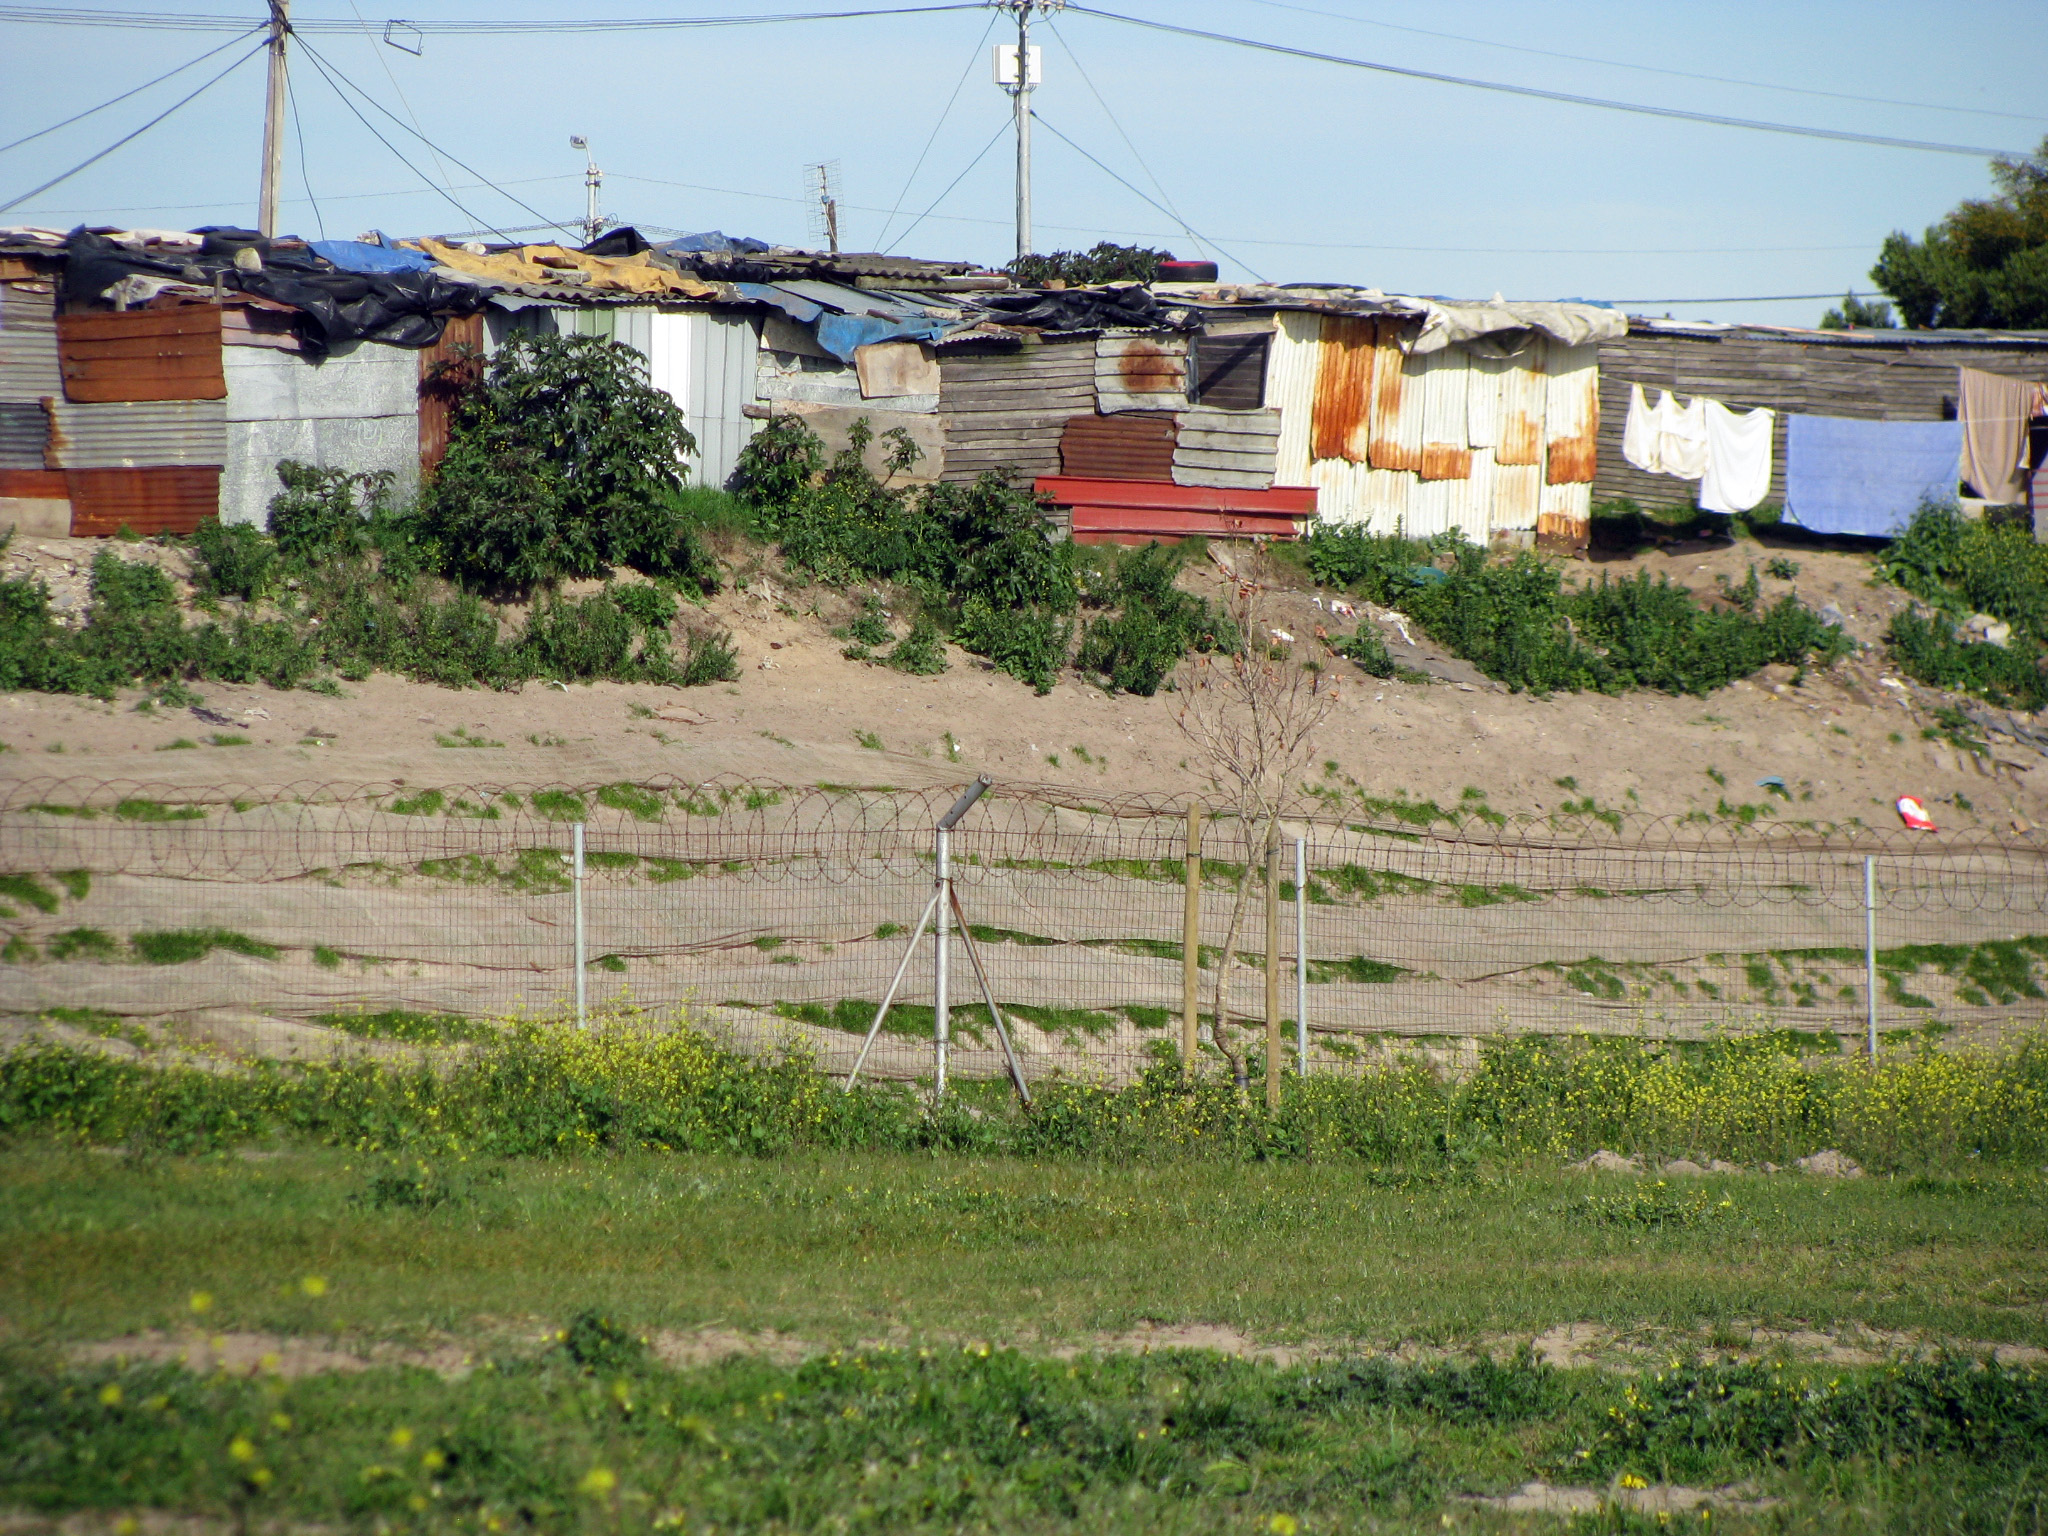 Shack housing in Gugulethu